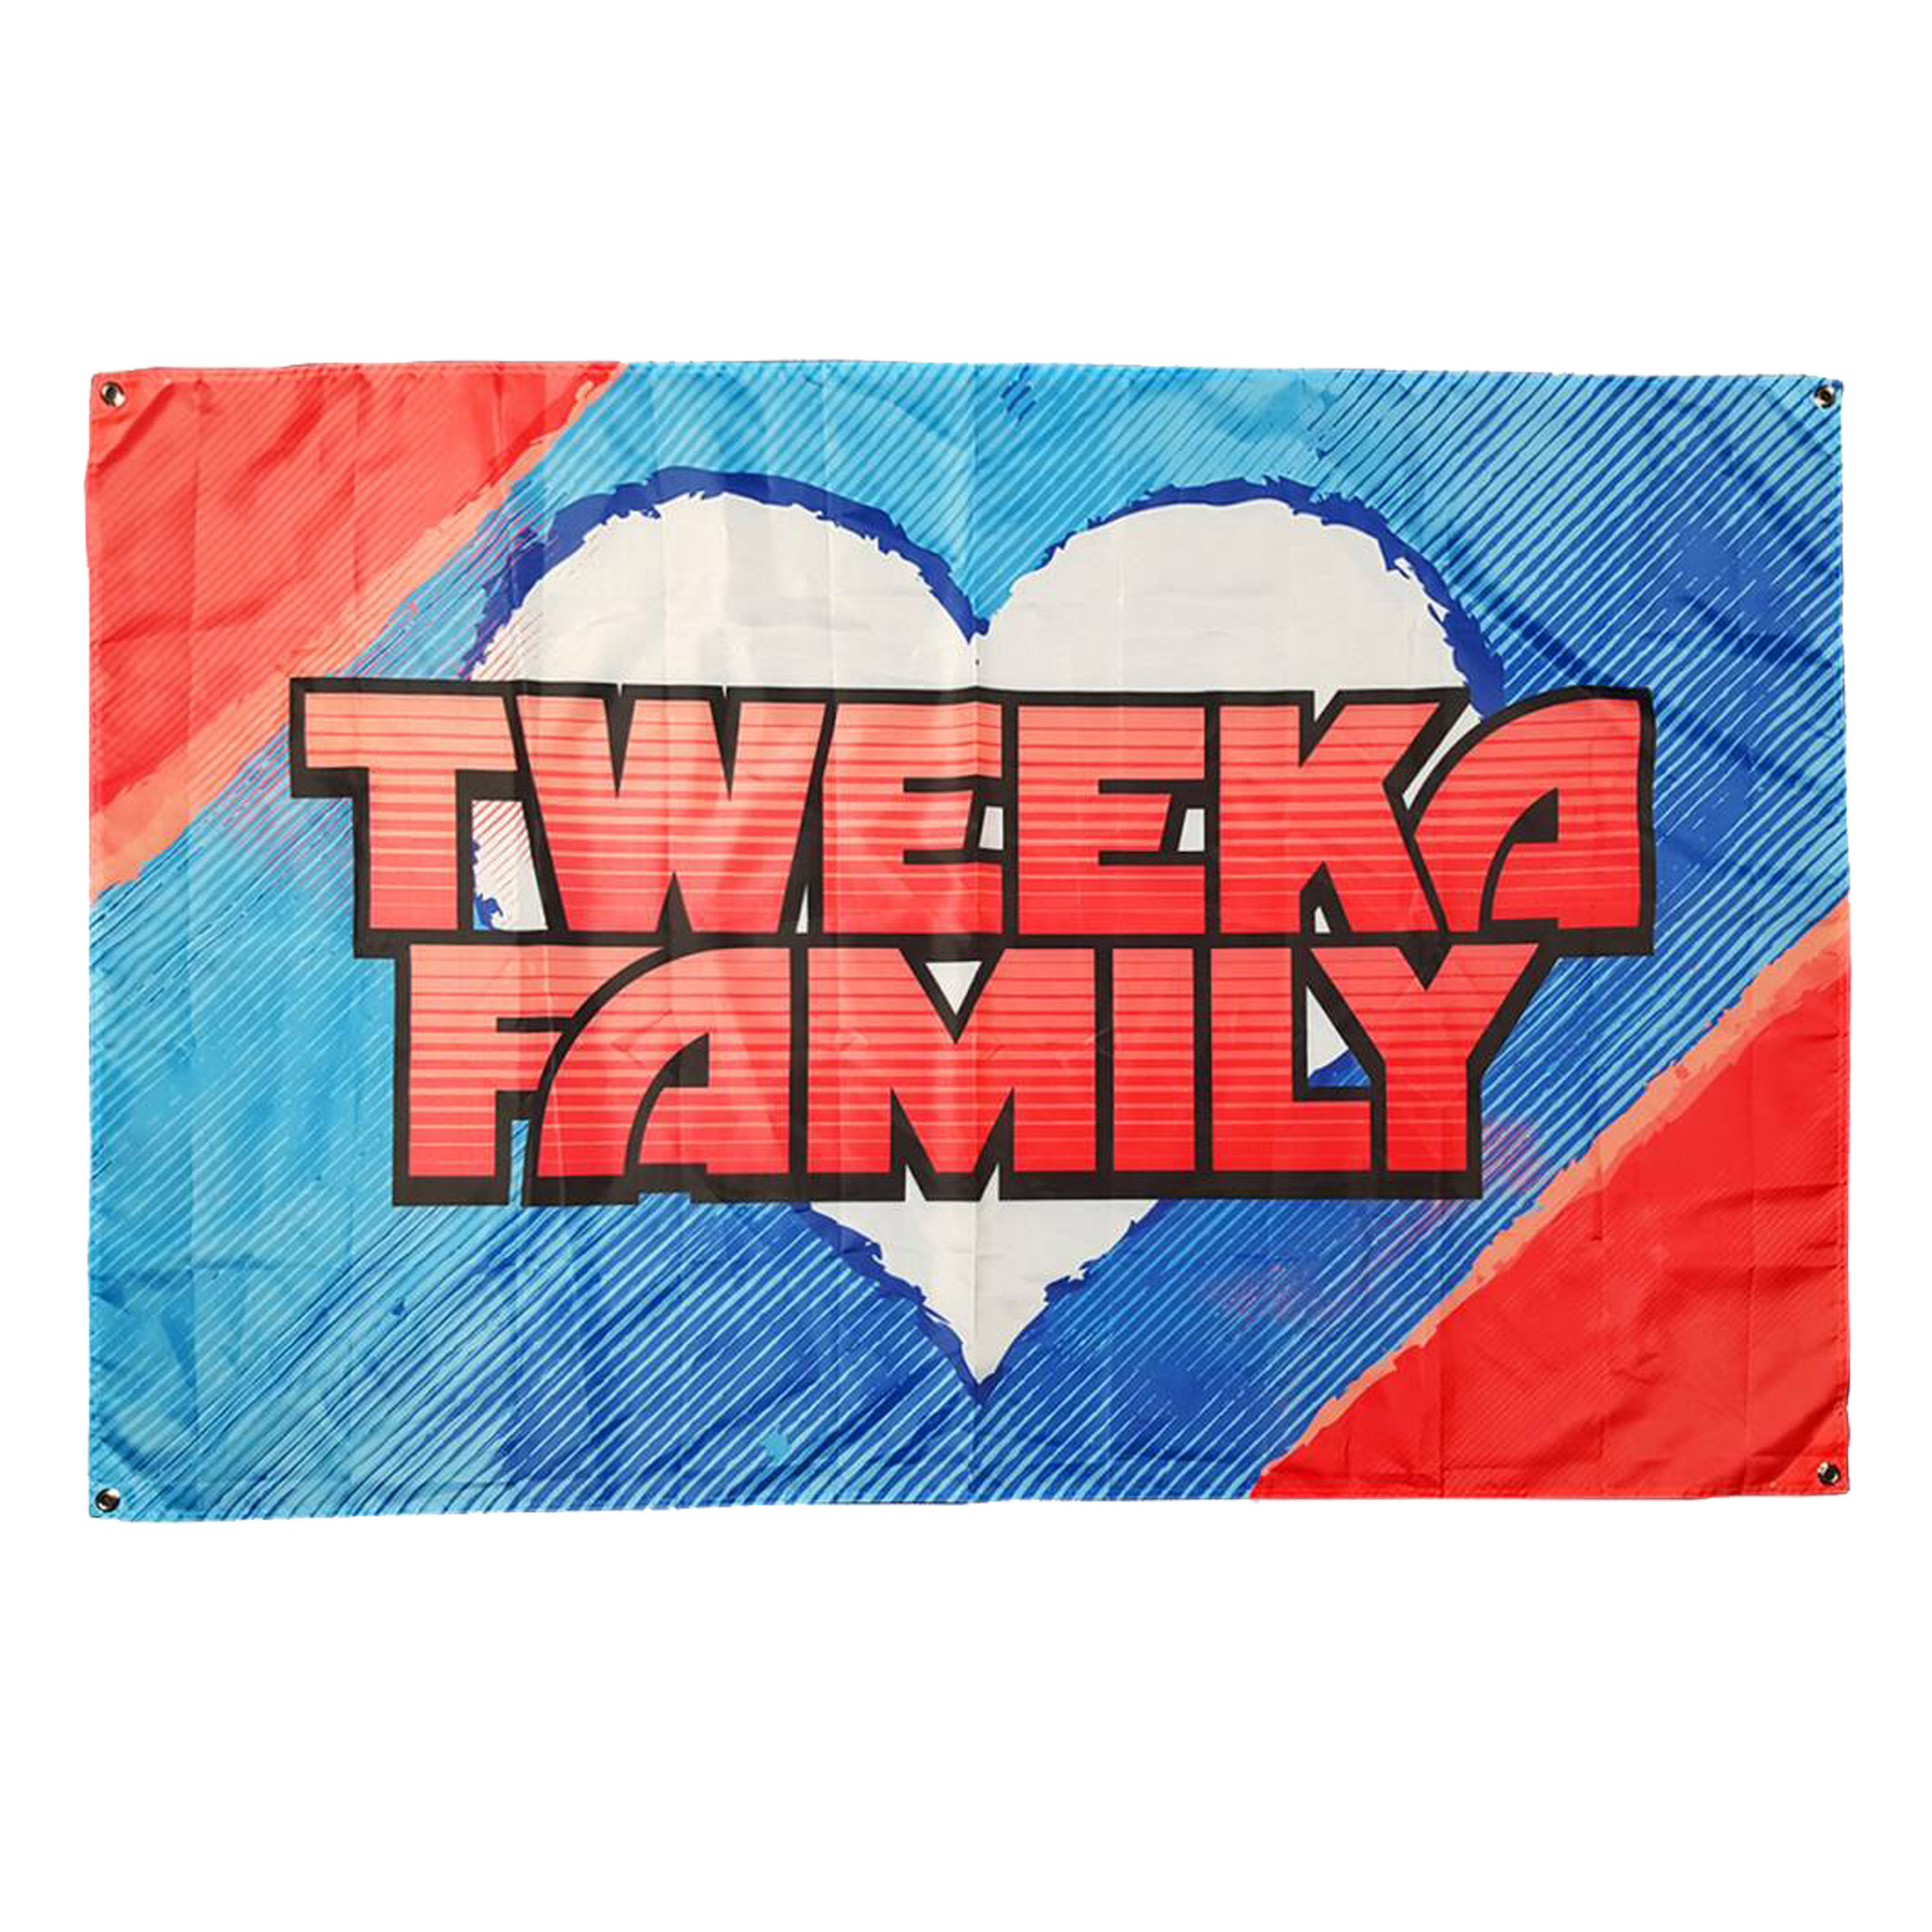 Da Tweekaz - Tweeka Family Flag